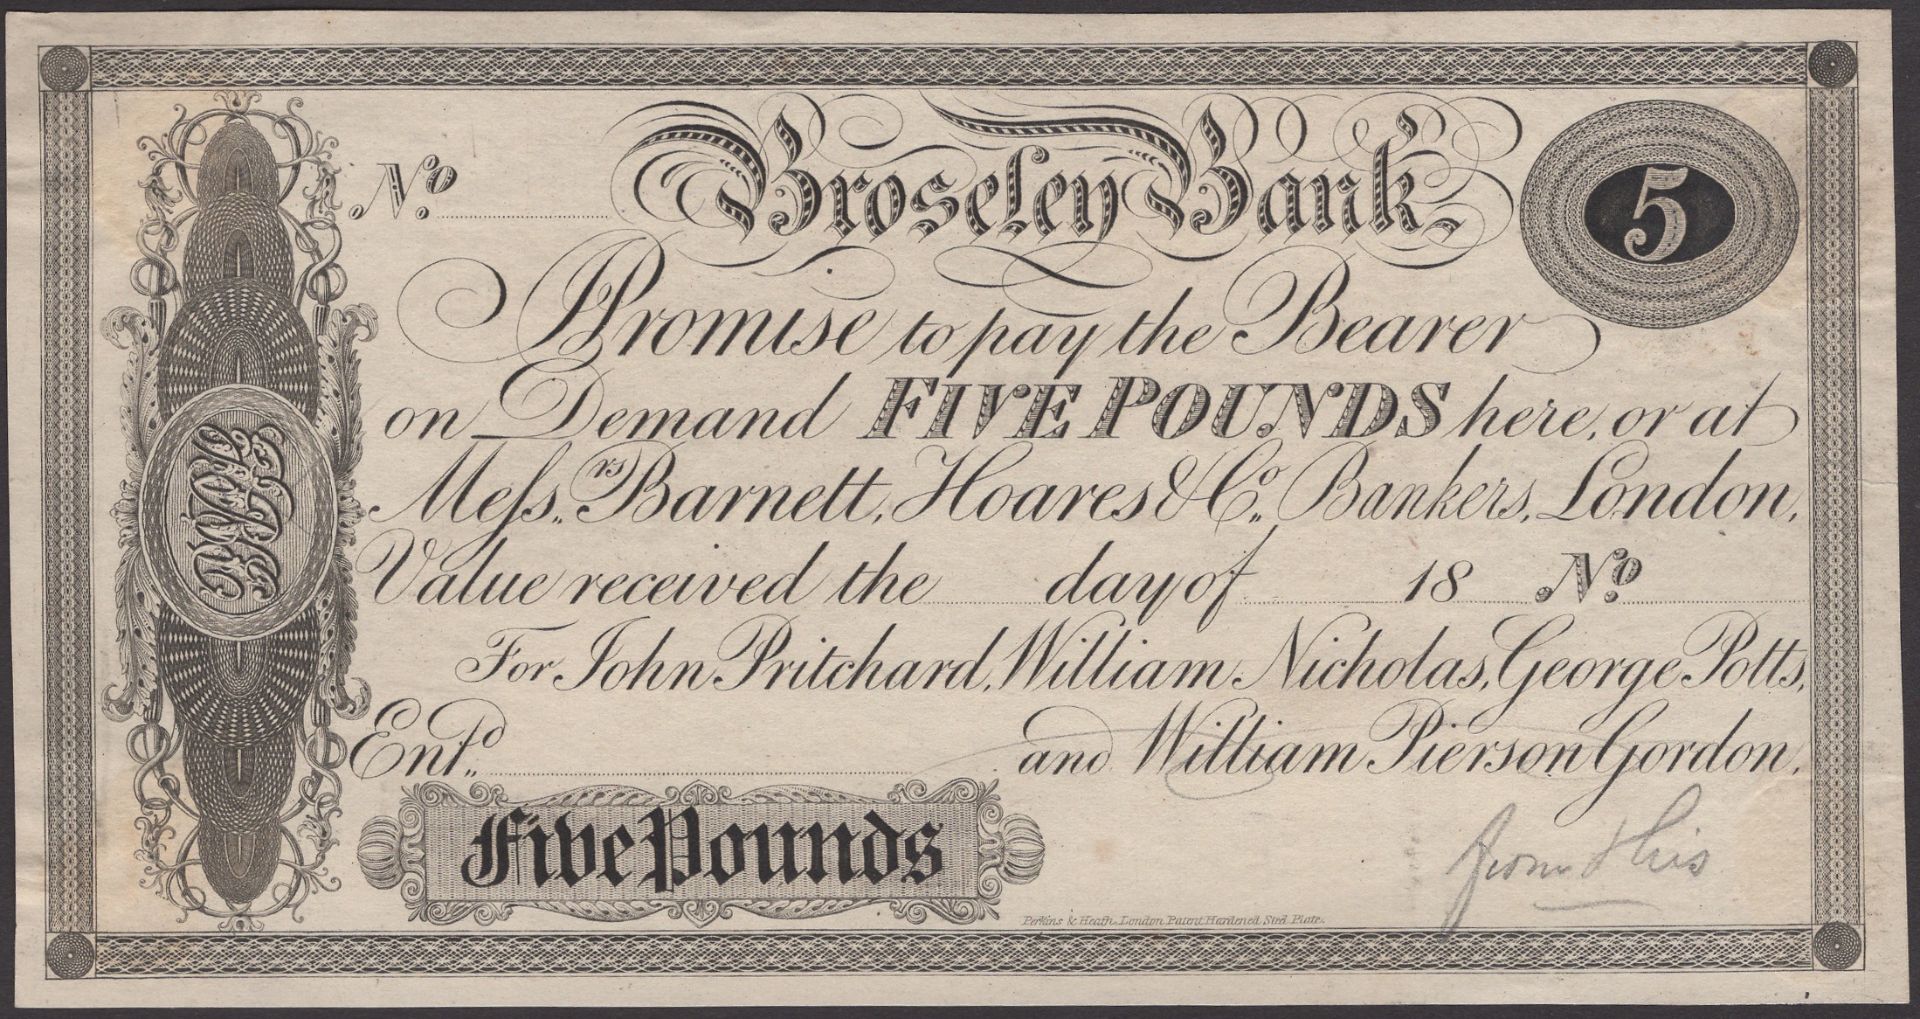 Broseley Bank, for John Pritchard, William Nicholas, George Potts, and William Pierson Gordo...